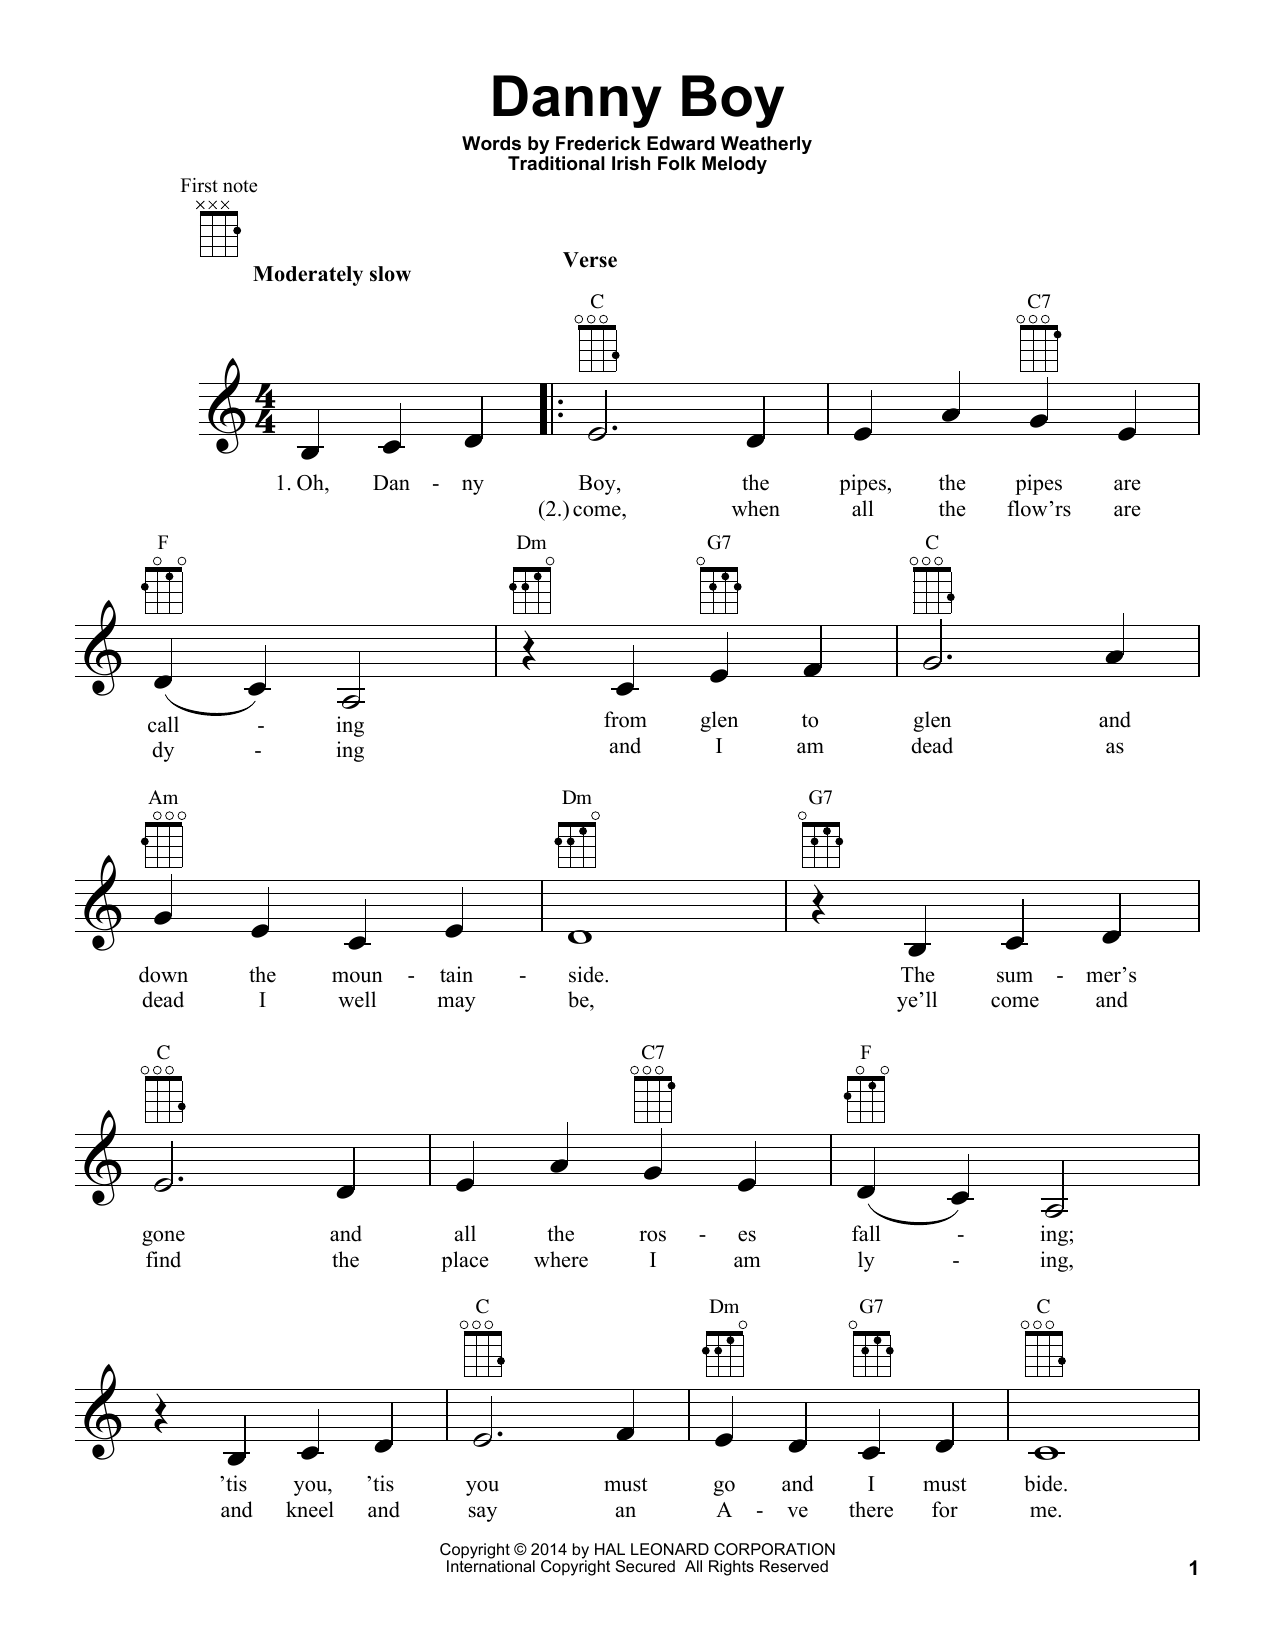 Traditional Irish Danny Boy Sheet Music Notes & Chords for Melody Line, Lyrics & Chords - Download or Print PDF